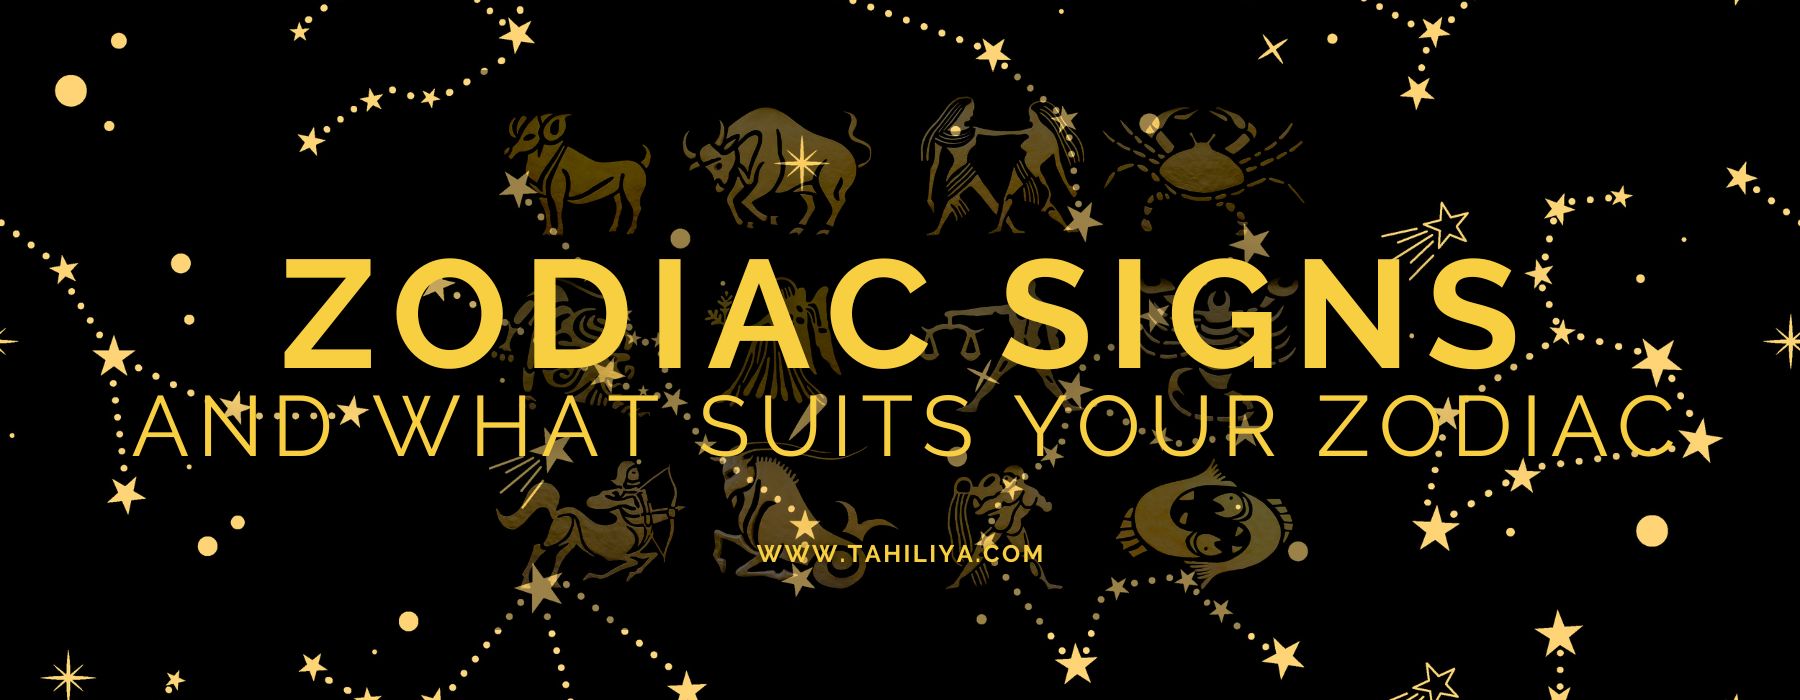 zodiac sign horoscope